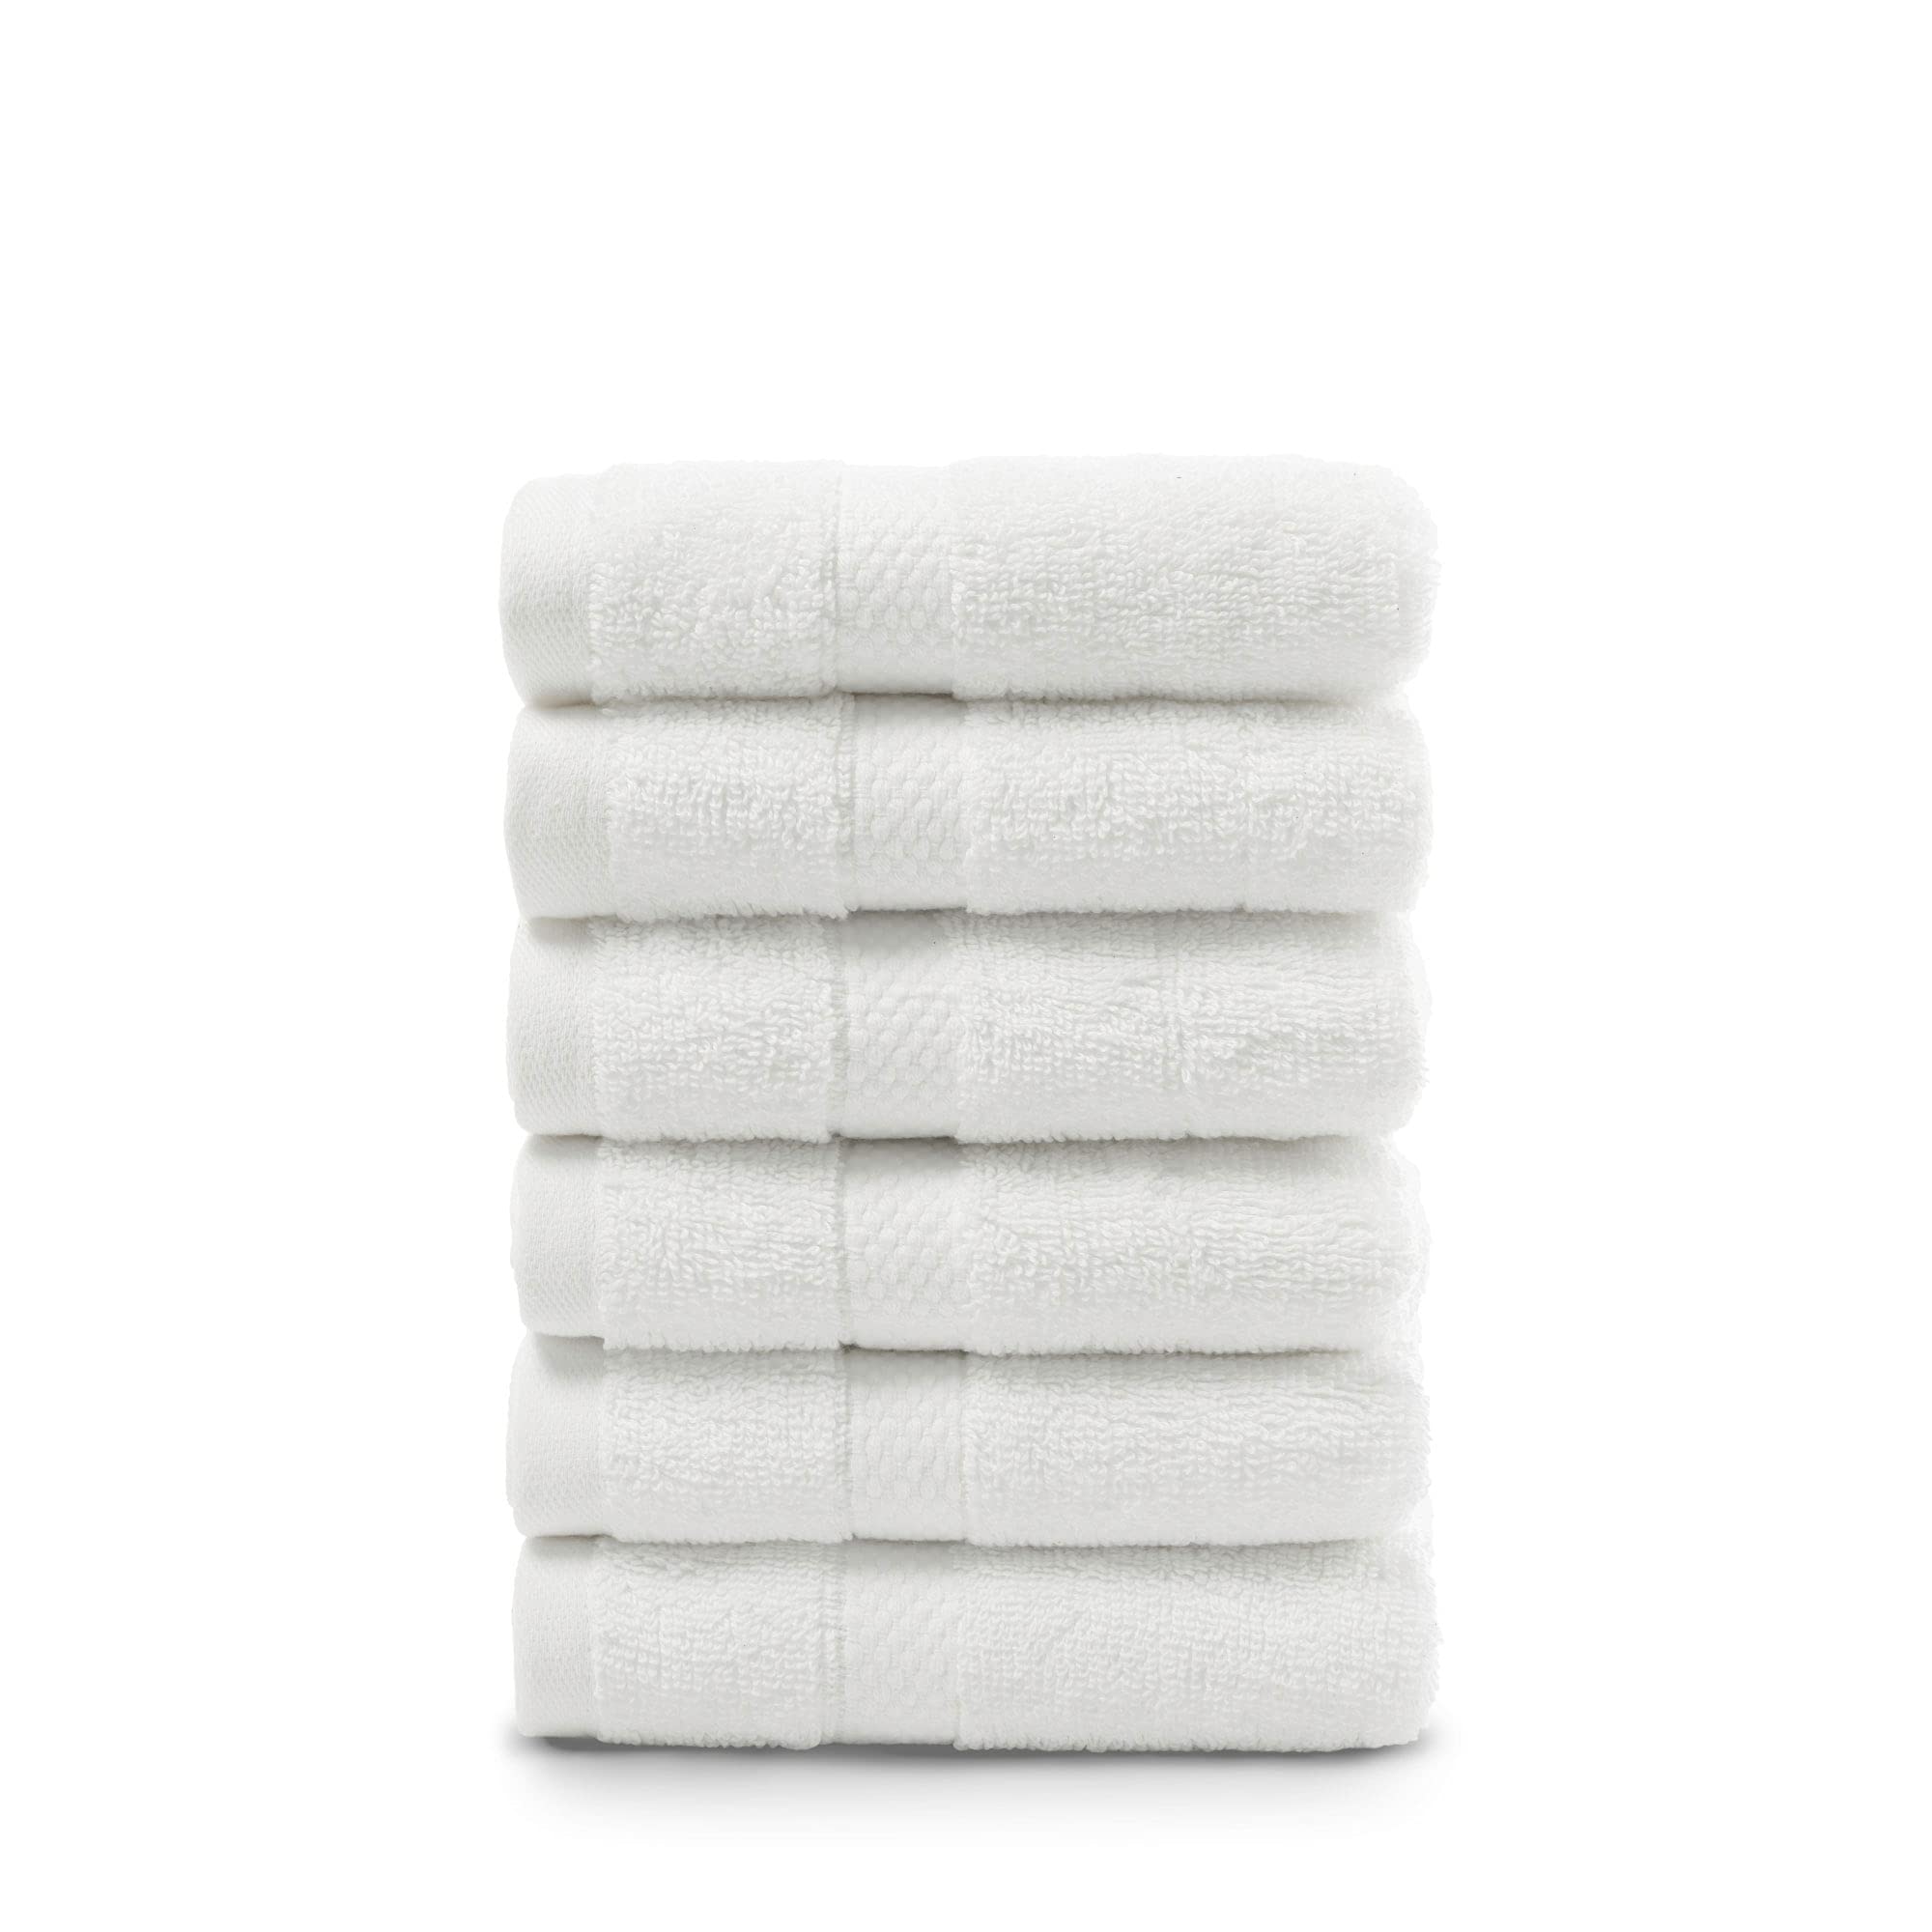 Premium 700gsm Cotton Villa Terry Towels